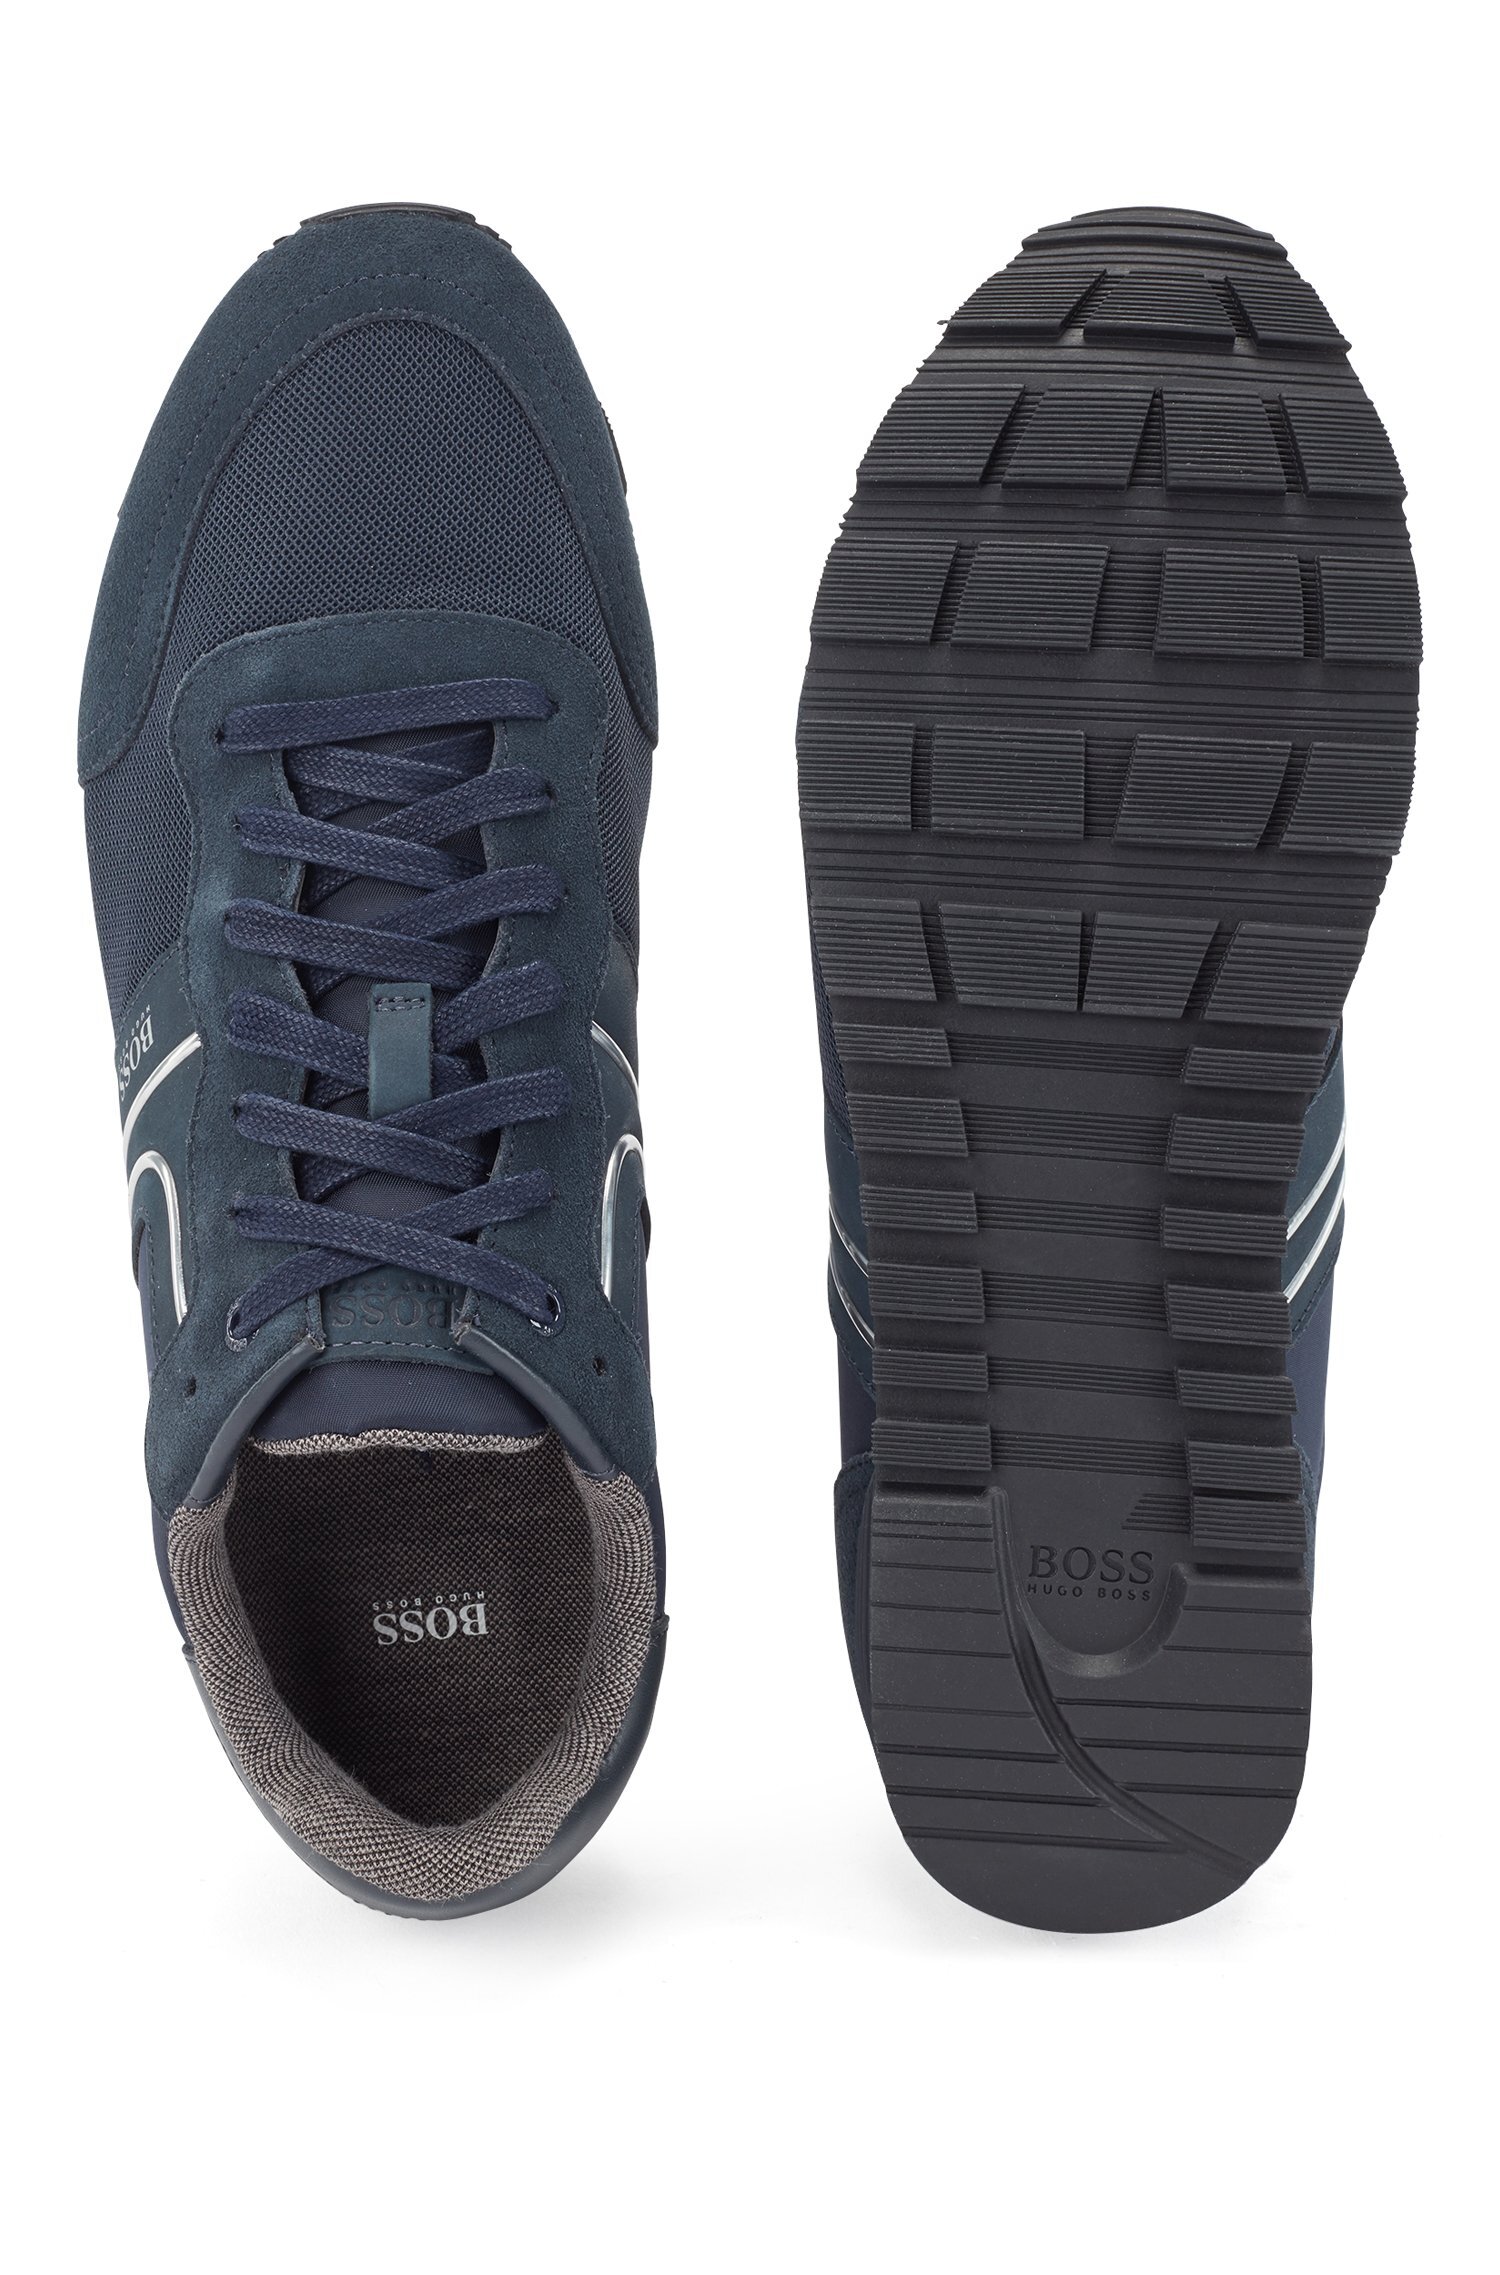 Hugo Boss Running-style sneakers, dark blue, 41